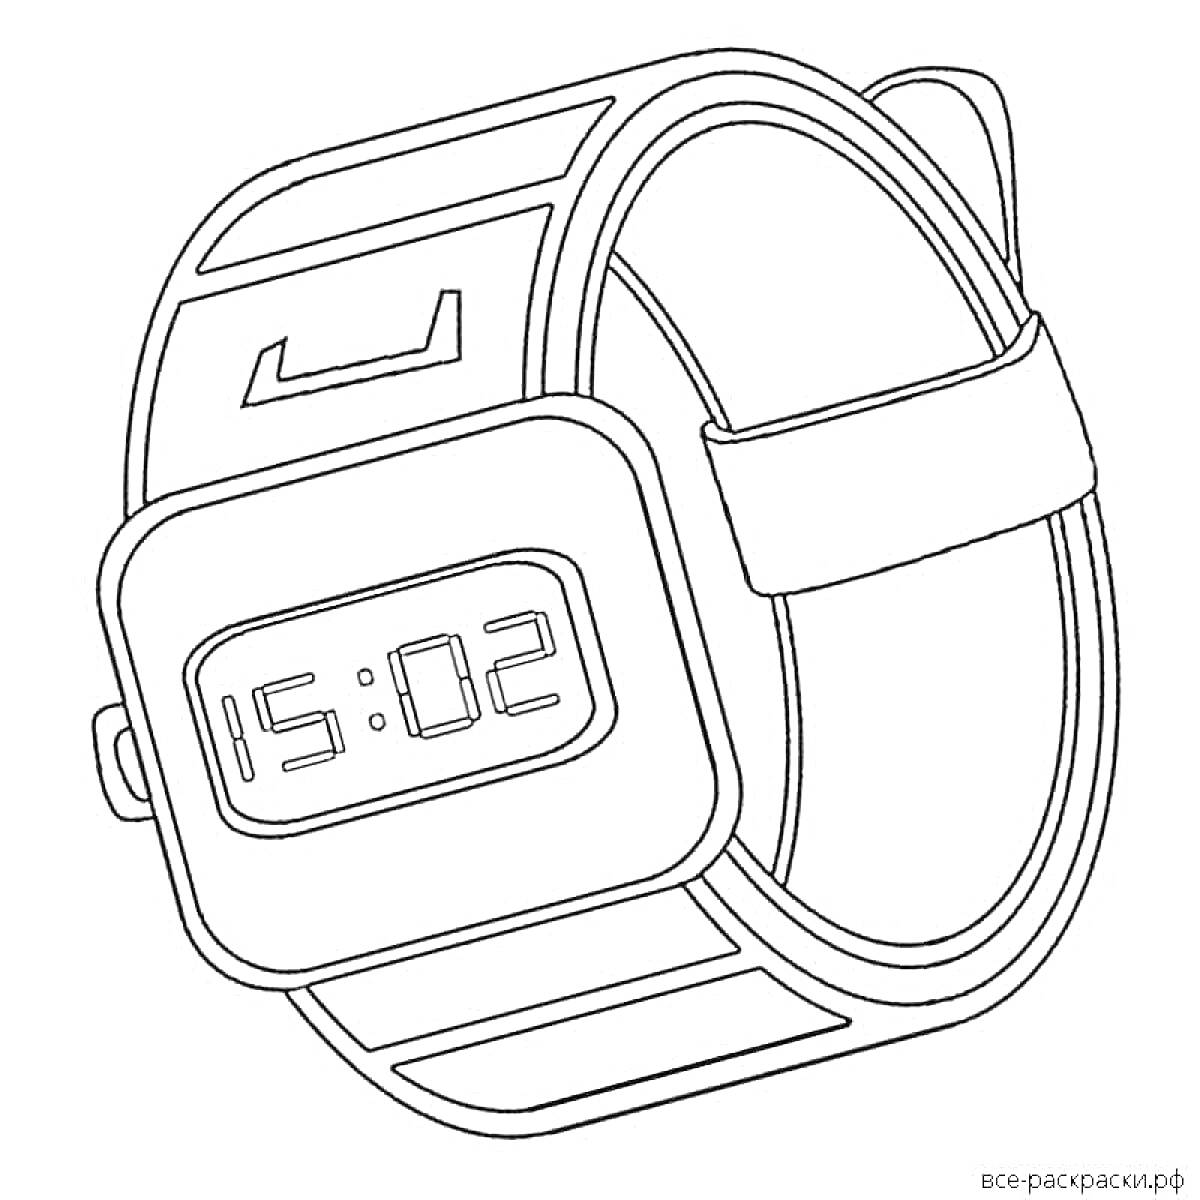 На раскраске изображено: Наручные часы, Электронные часы, Время, Аксессуар, Техника, Часы